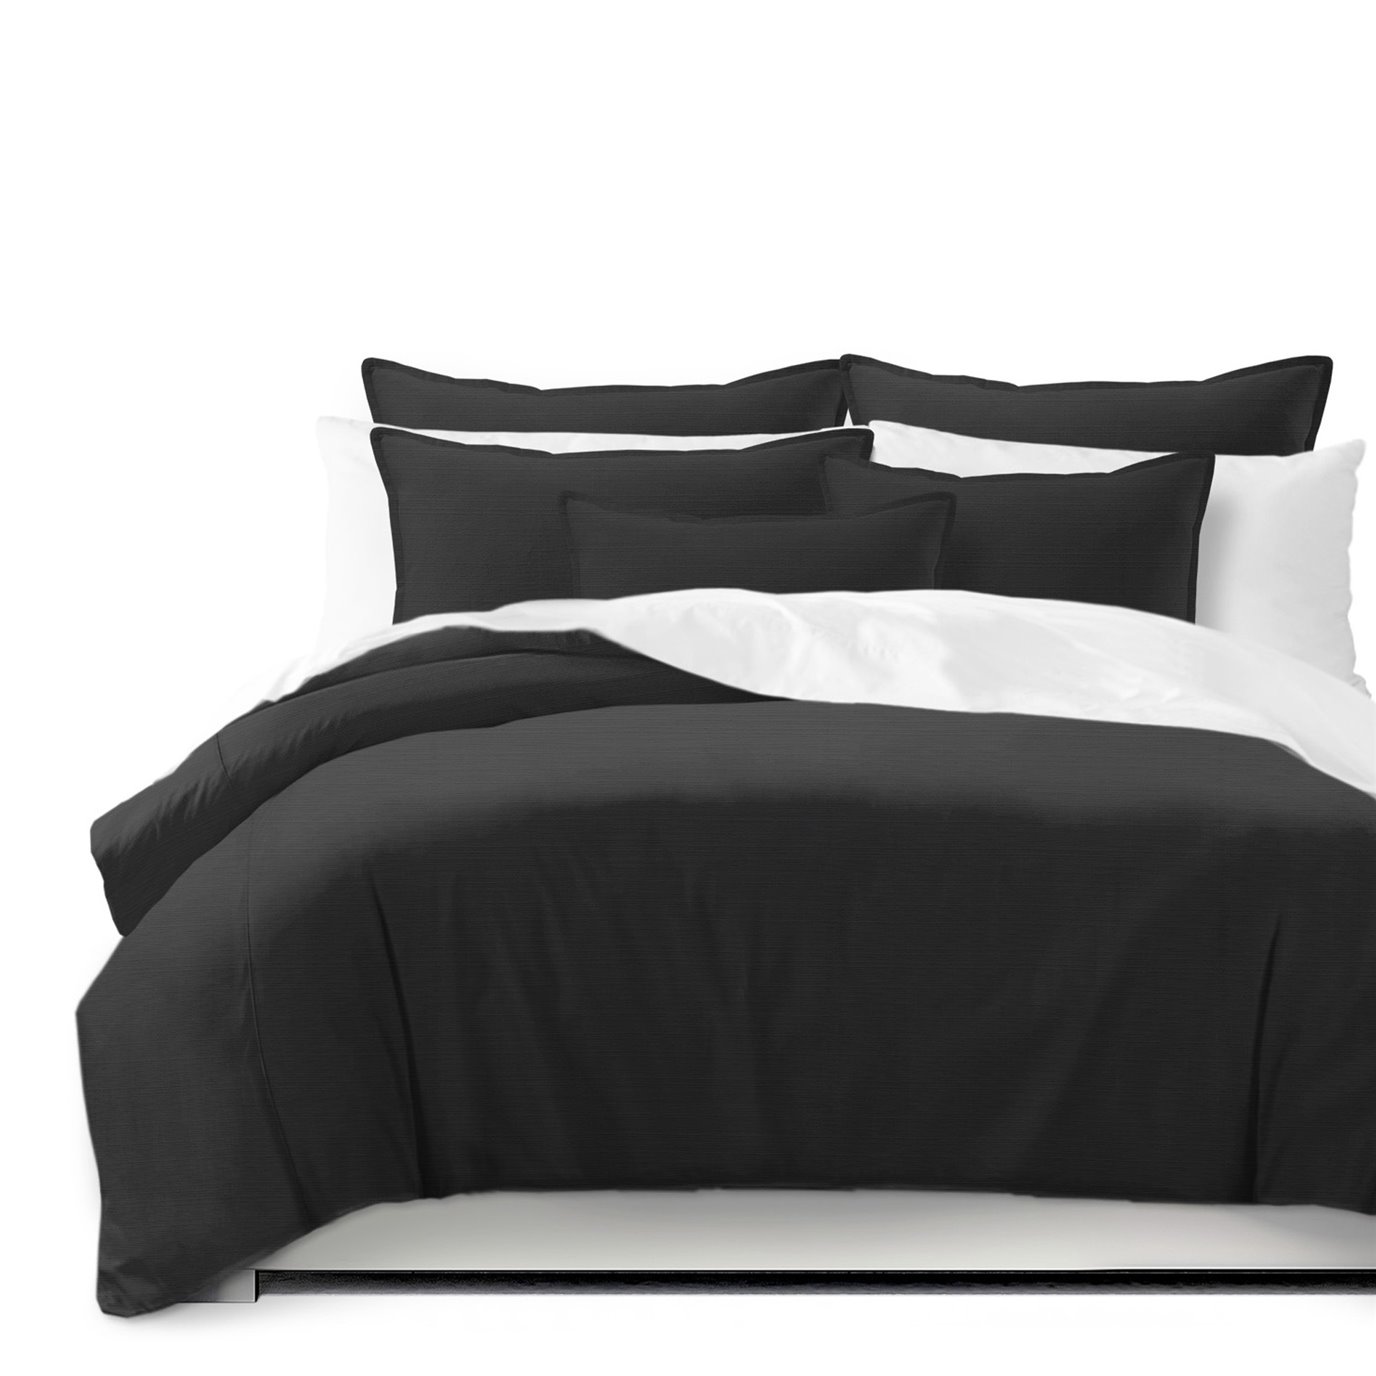 Nova Black Duvet Cover and Pillow Sham(s) Set - Size King / California King